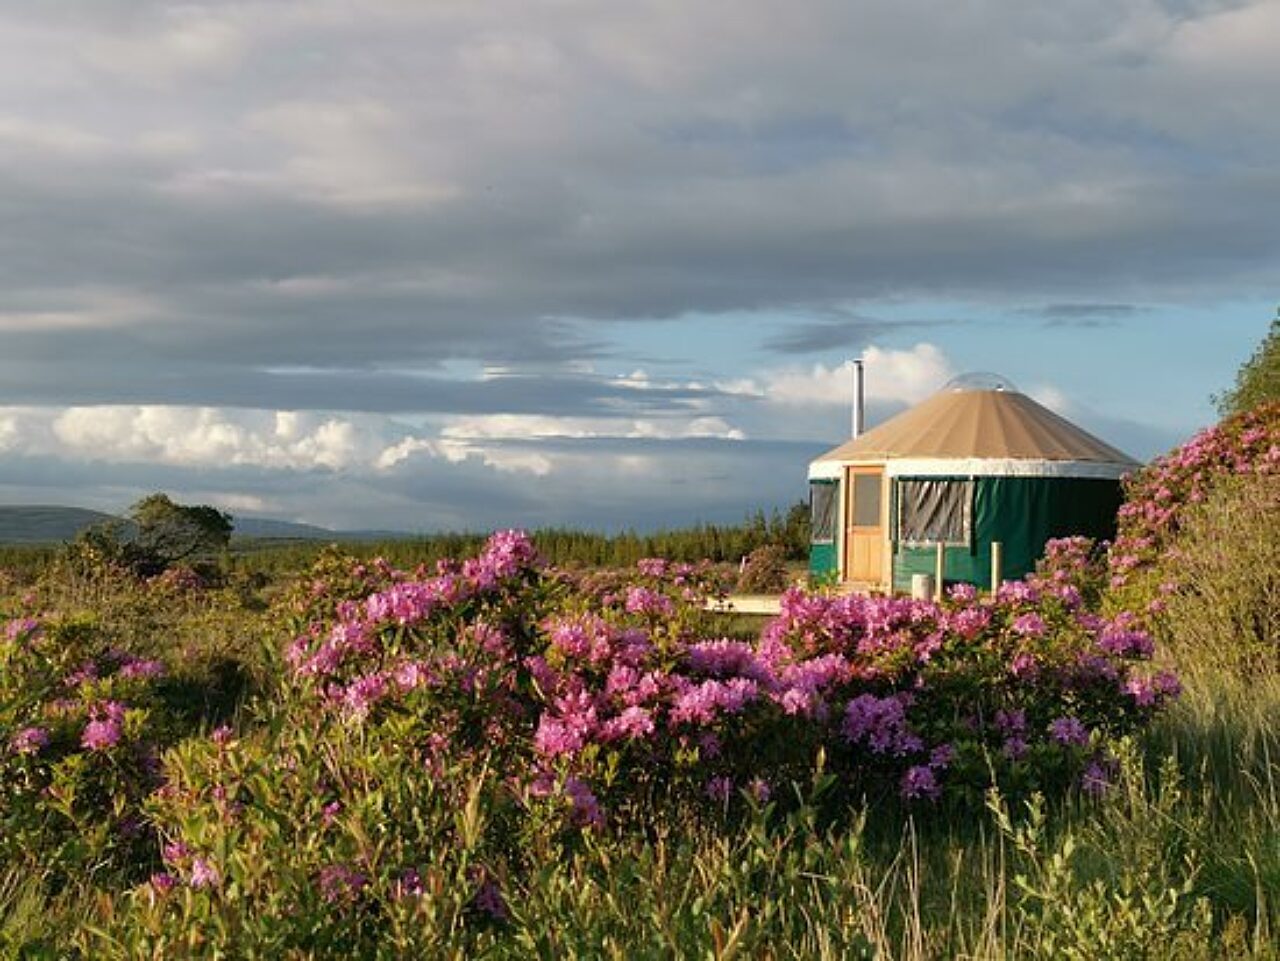 The bog yurt